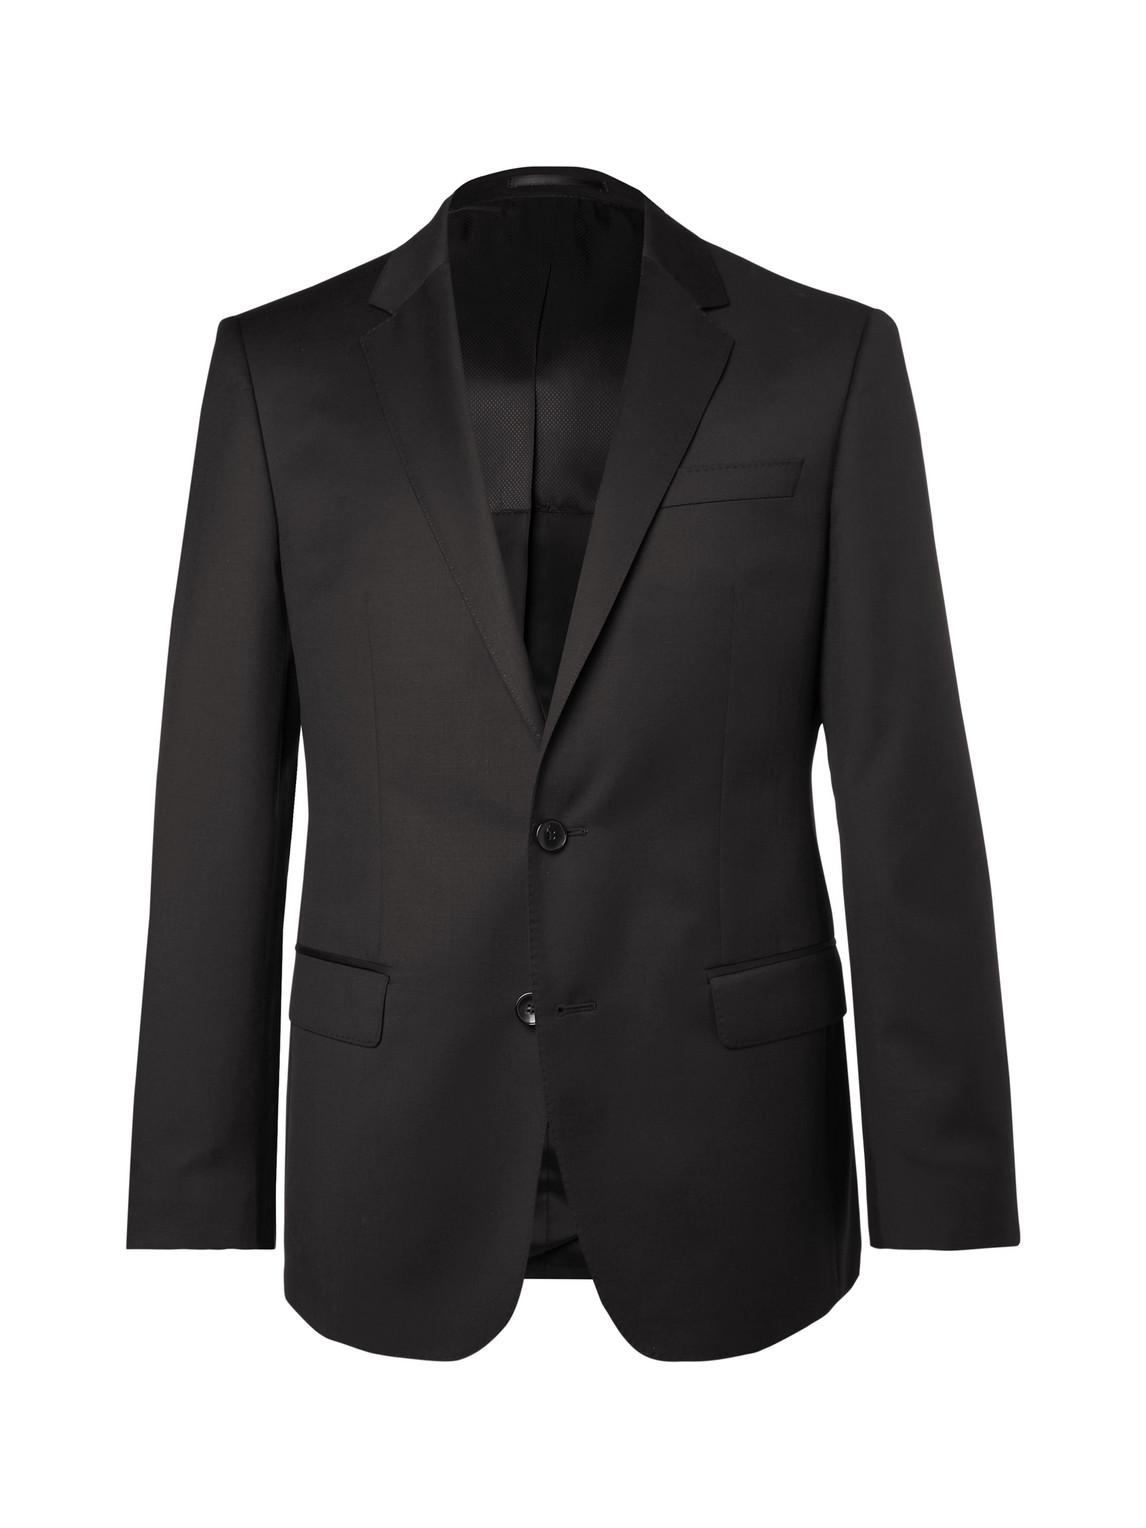 BOSS by HUGO BOSS Black Hayes Slim-fit Super 120s Virgin Wool Suit Jacket  for Men | Lyst